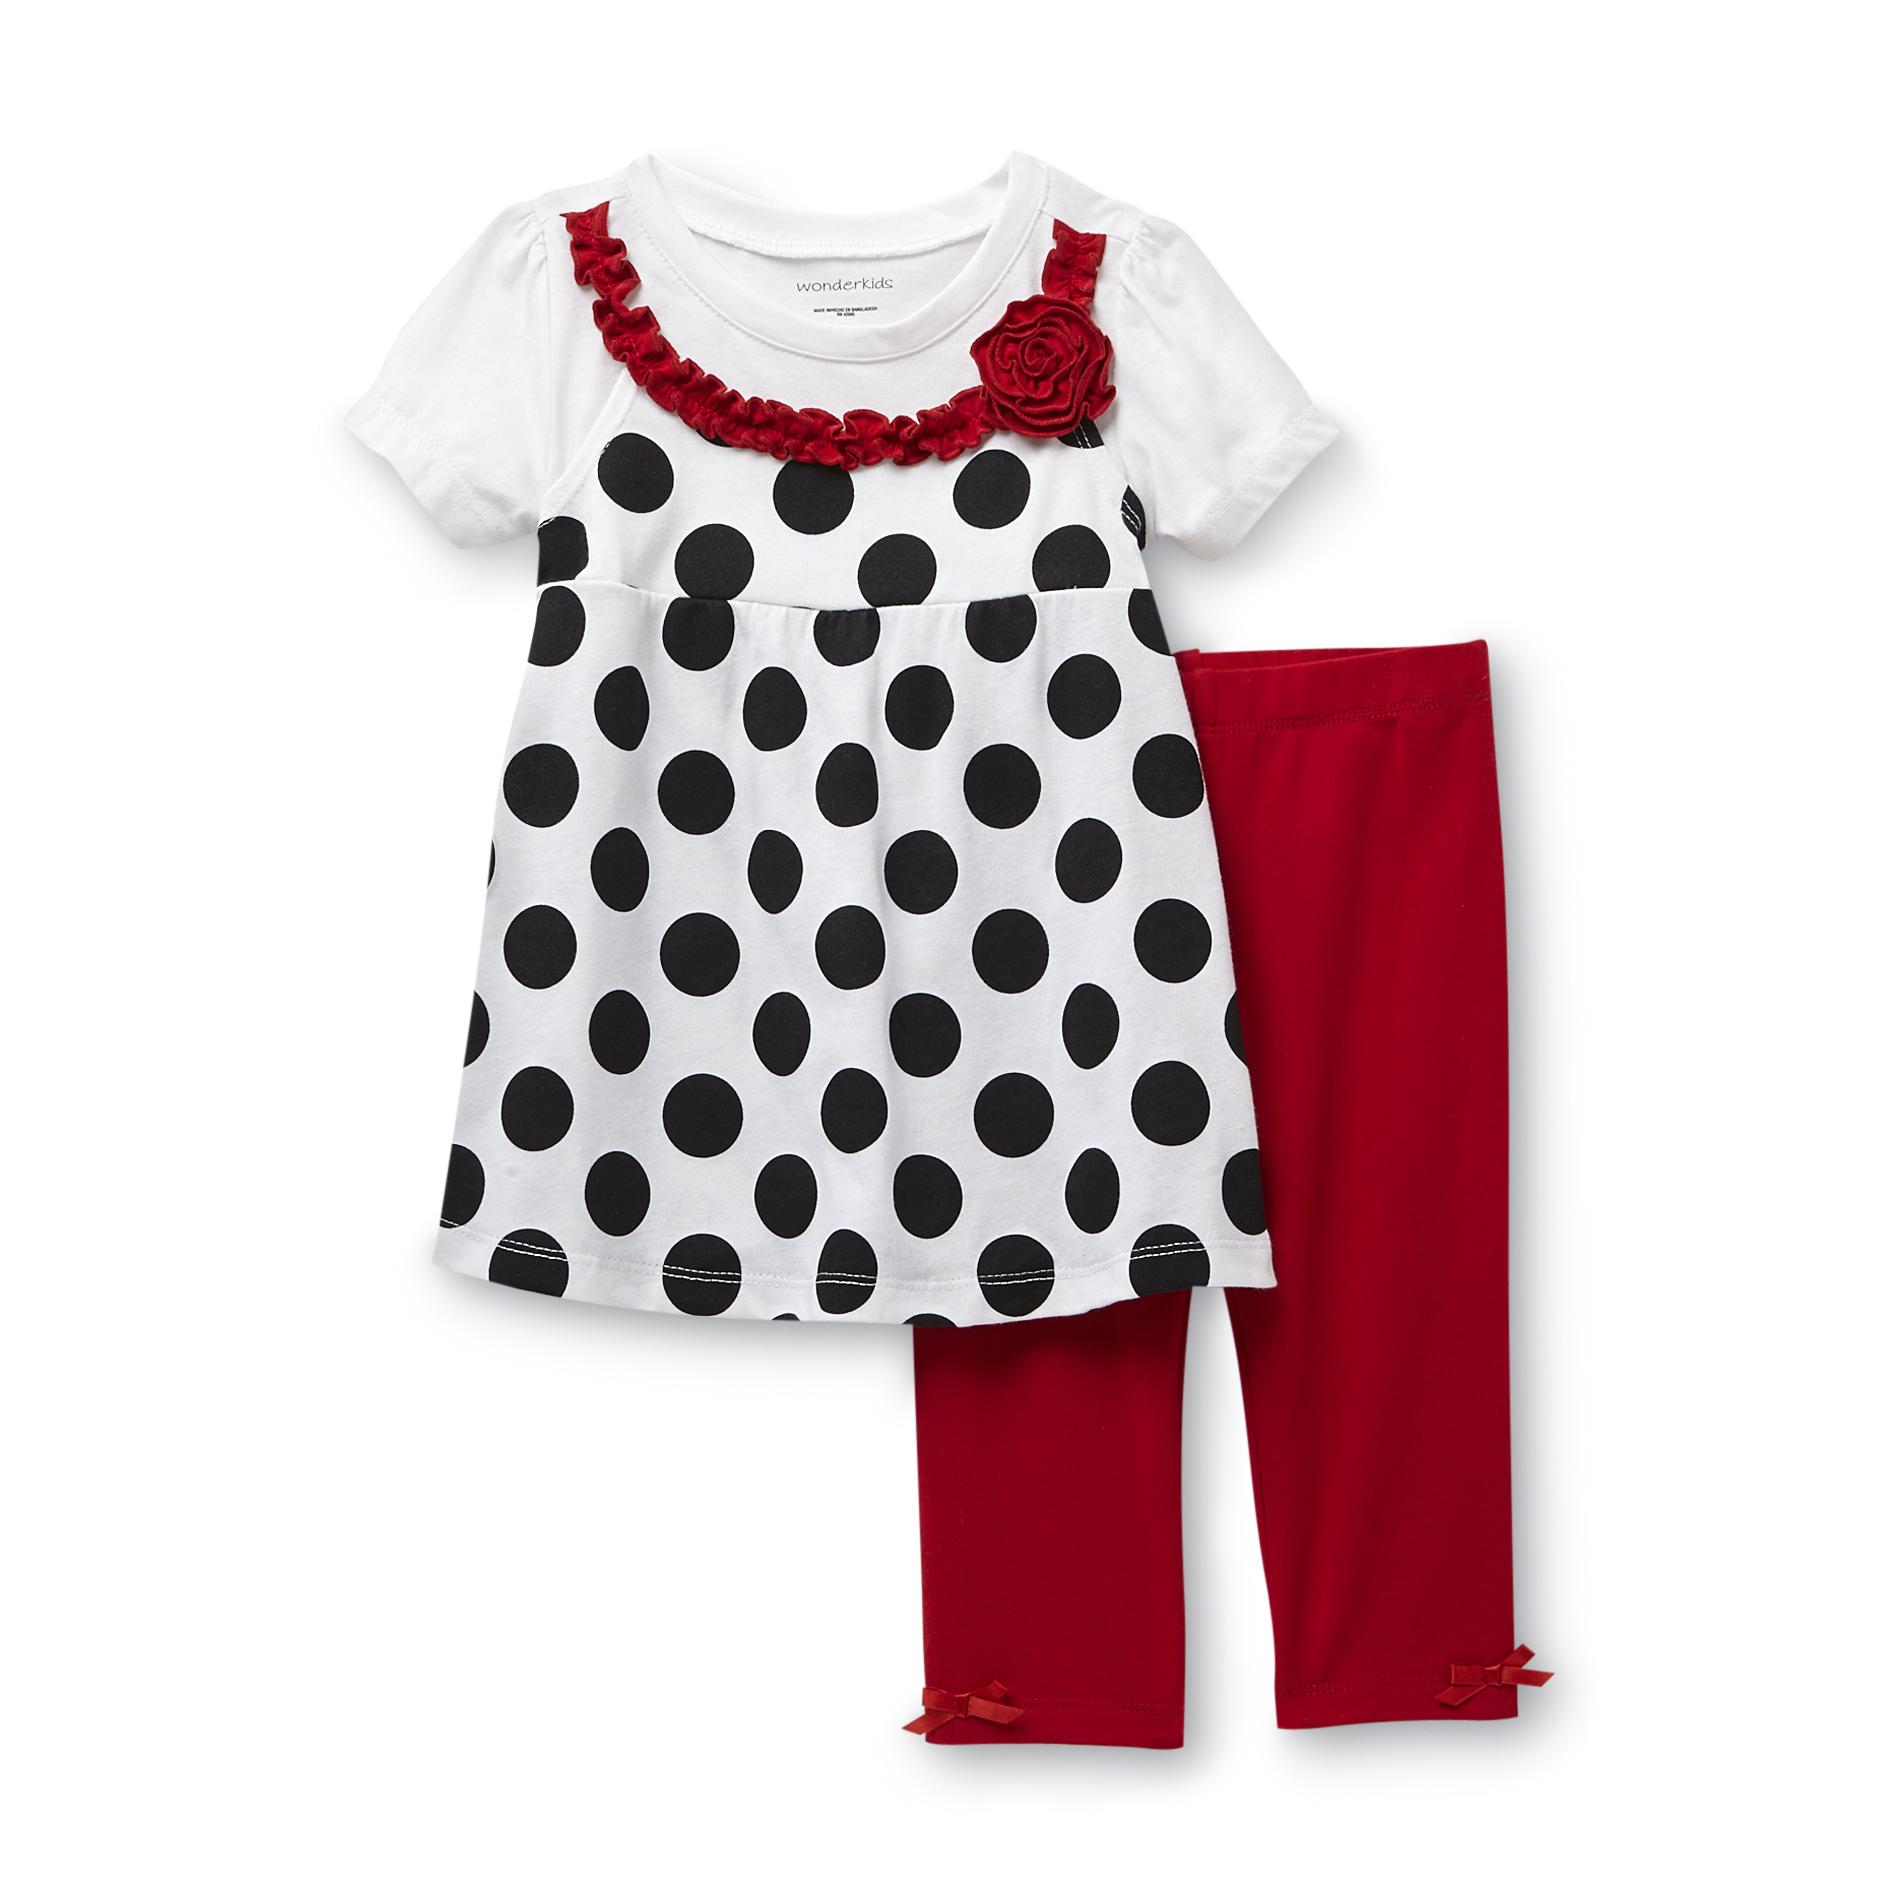 WonderKids Infant & Toddler Girl's Layered-Look Top & Leggings - Polka Dots